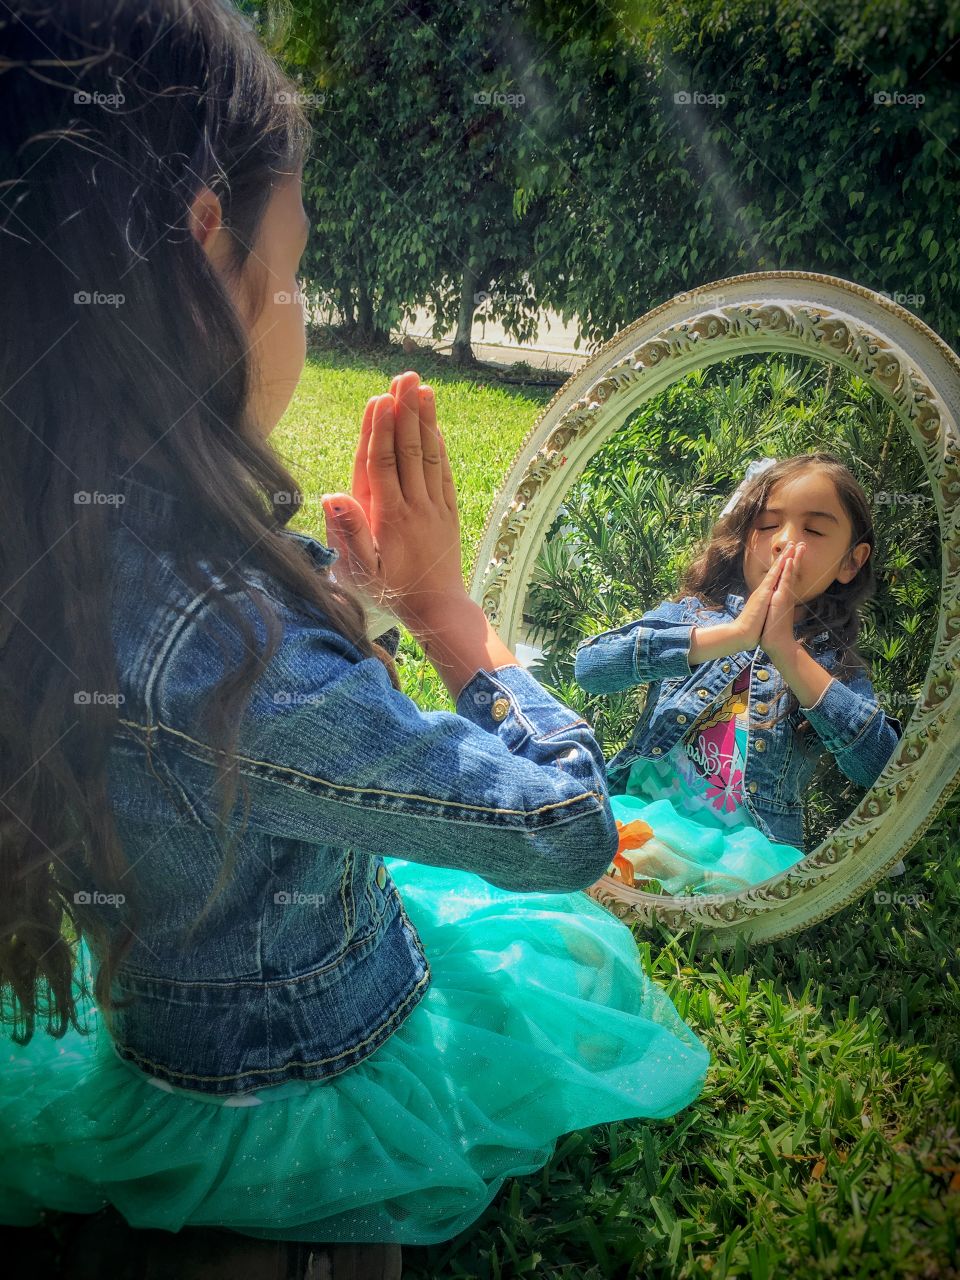 Reflection of girl in mirror praying